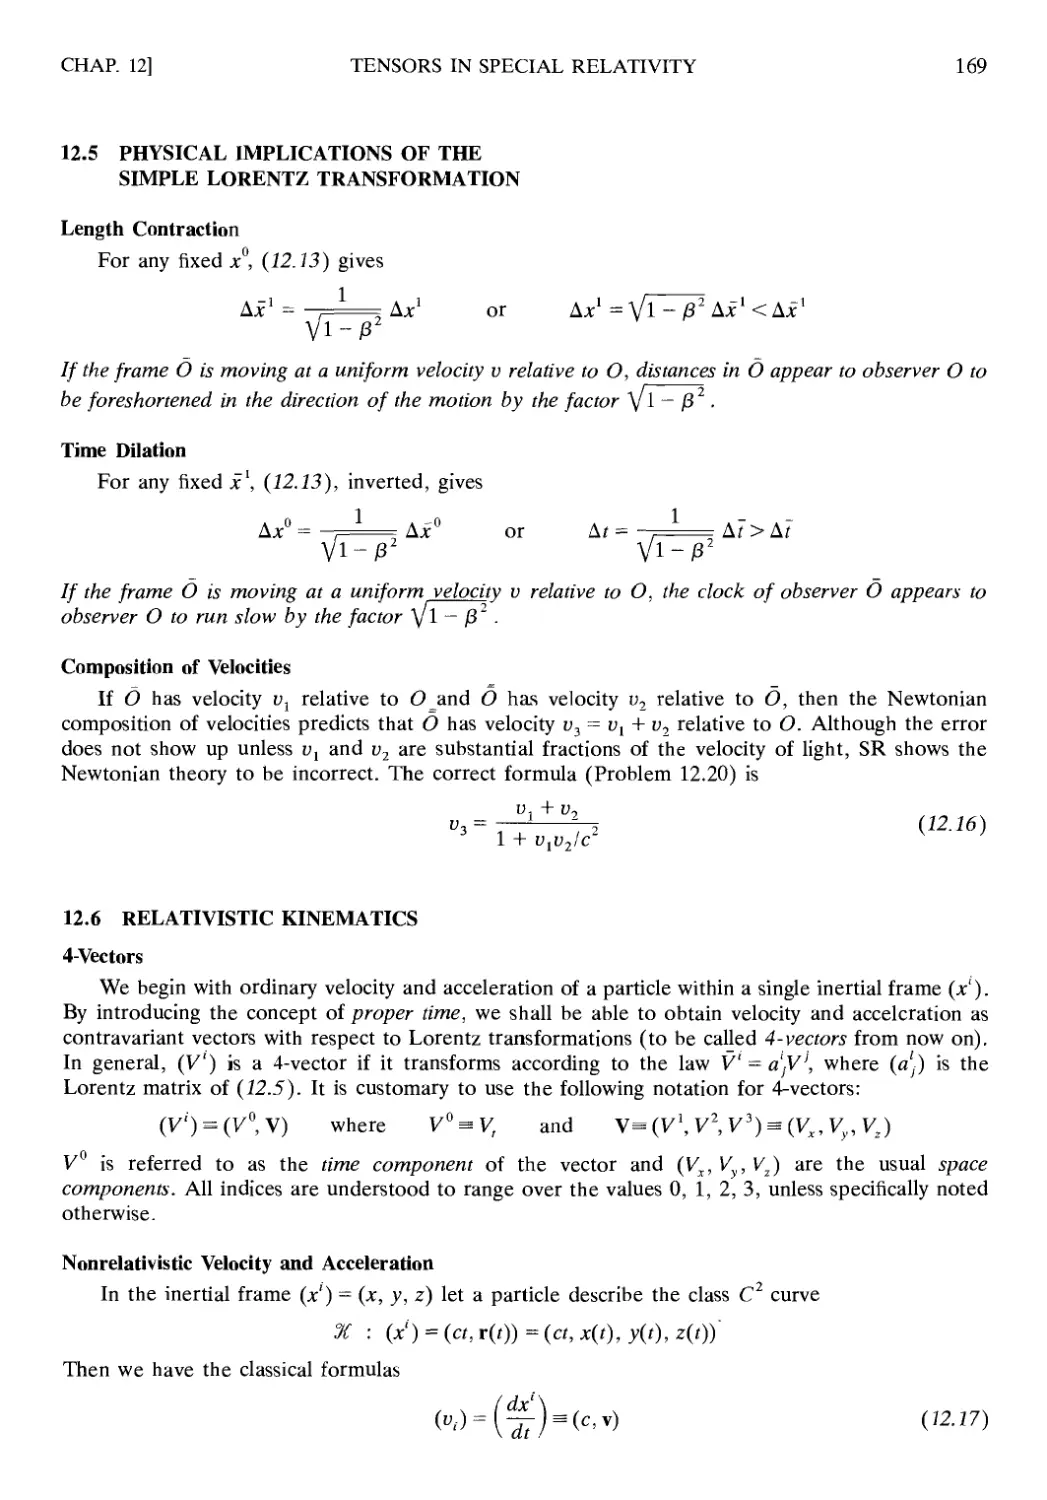 12.5 Physical Implications of the Simple Lorentz Transformation
12.6 Relativistic Kinematics